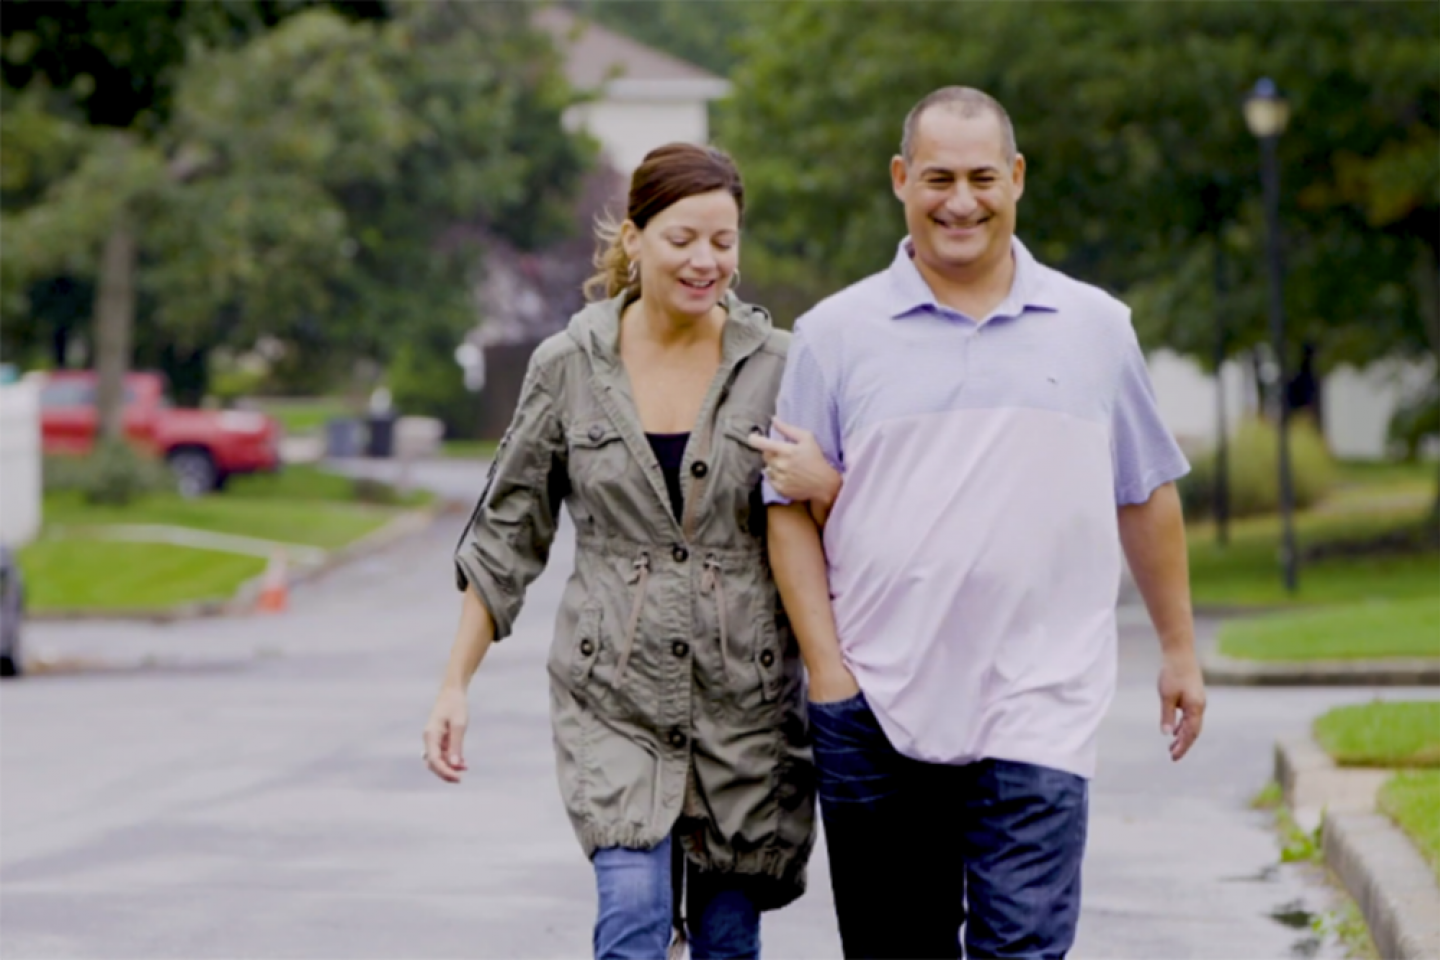 Sandy Krykostas walking with his wife.